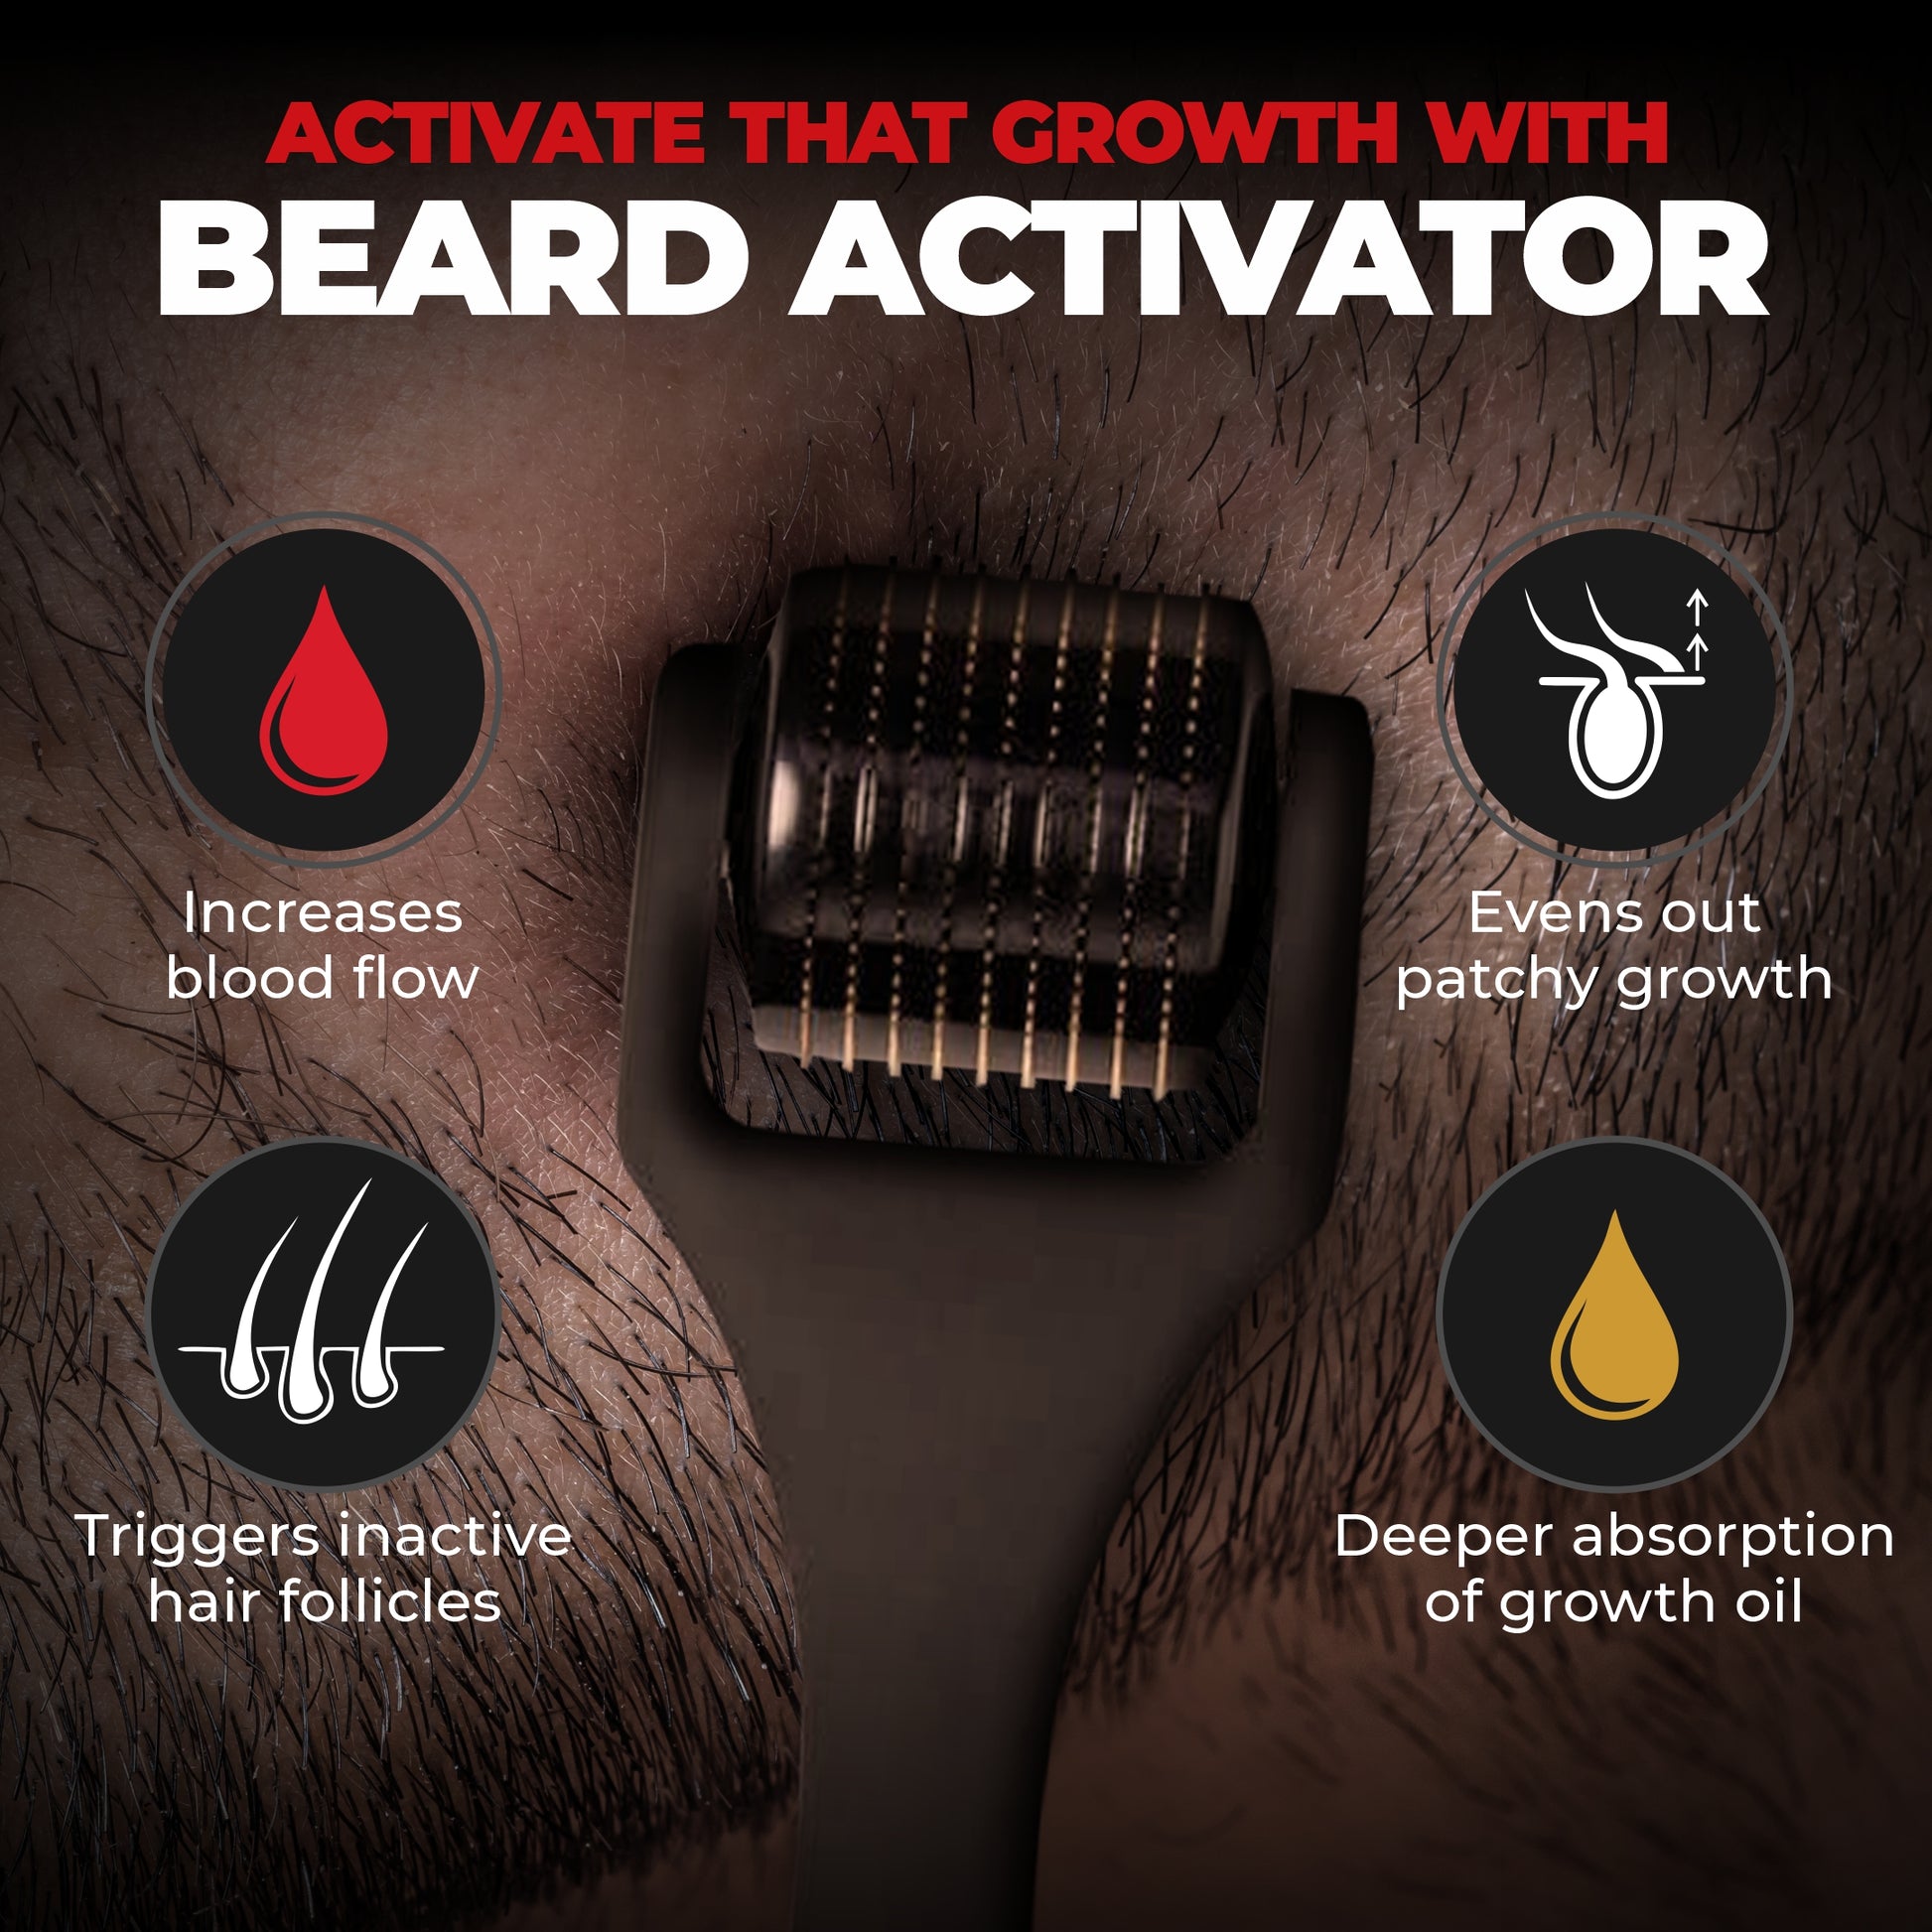 Beardo Beard Activator (0.5mm)